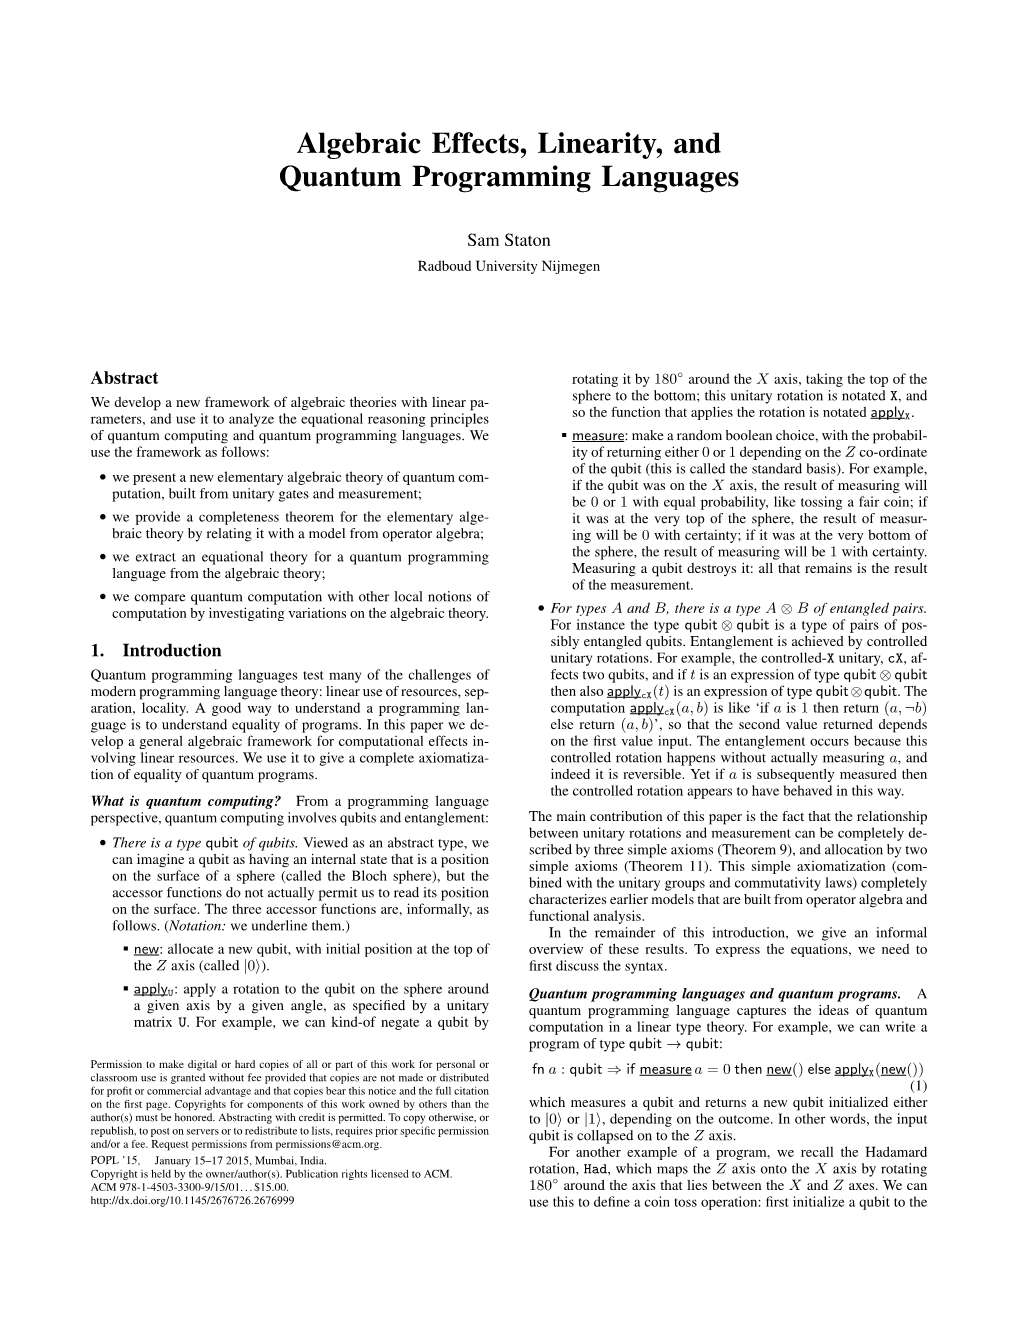 Algebraic Effects, Linearity, and Quantum Programming Languages